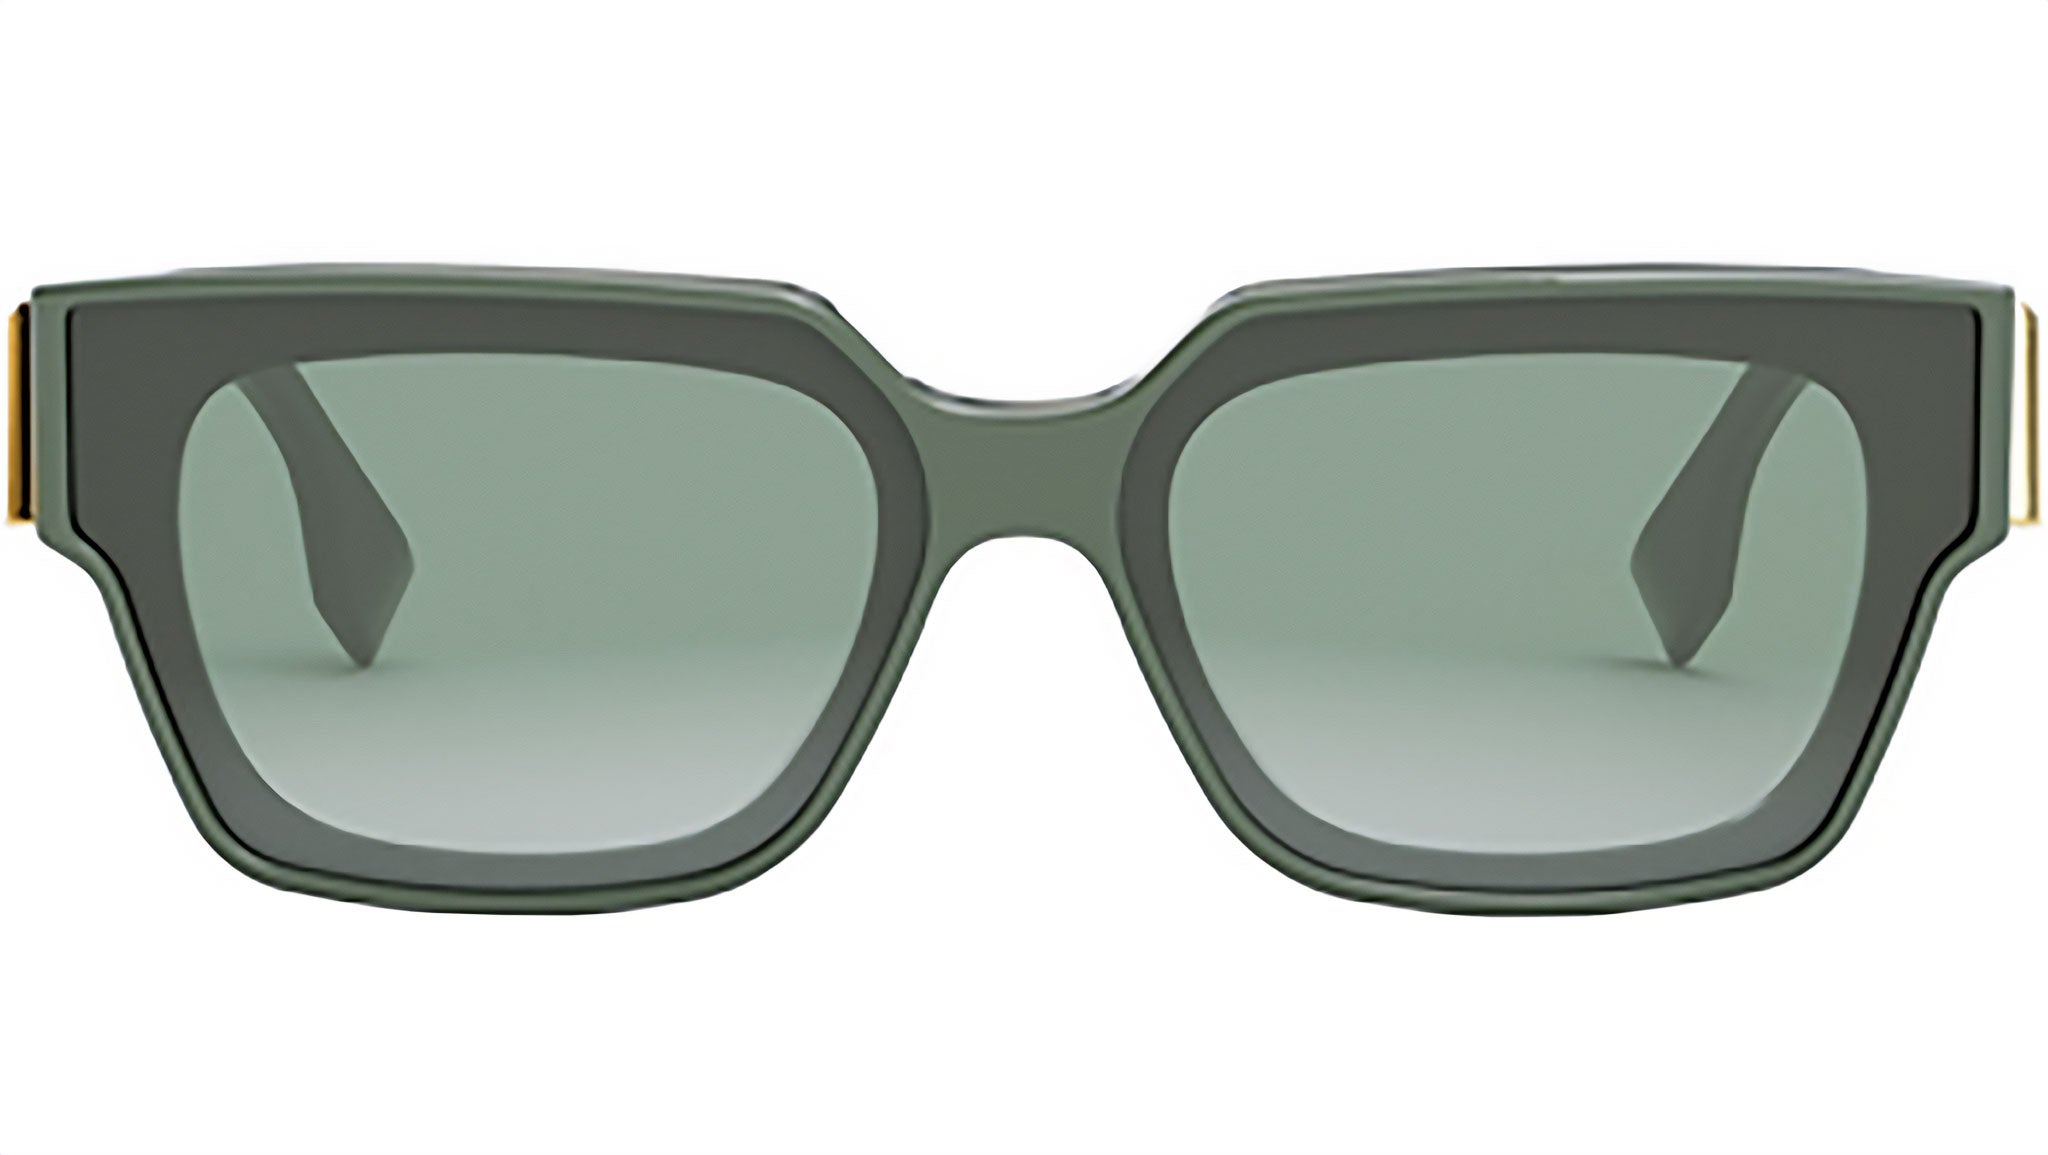 FE40097I Fendi Sunglasses Ivory / Brown / 51-23-140 mm